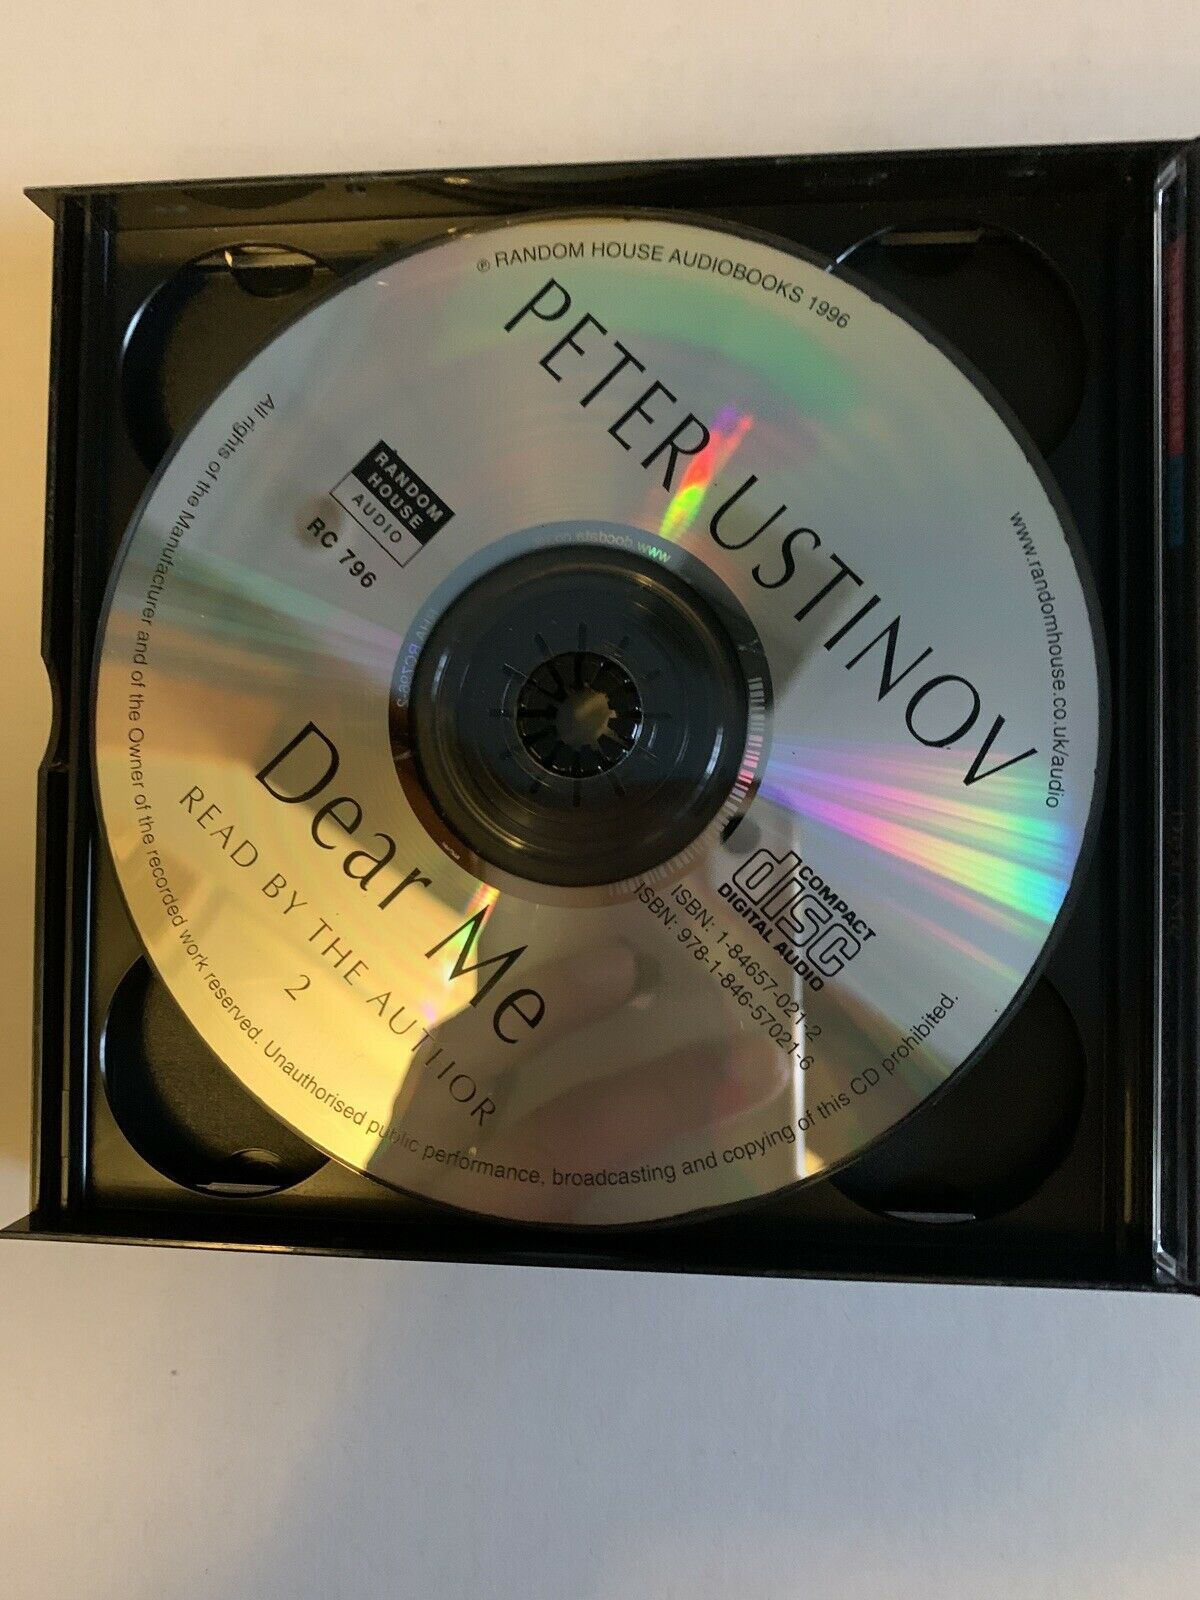 Dear Me by Peter Ustinov (CD-Audio, 1992)